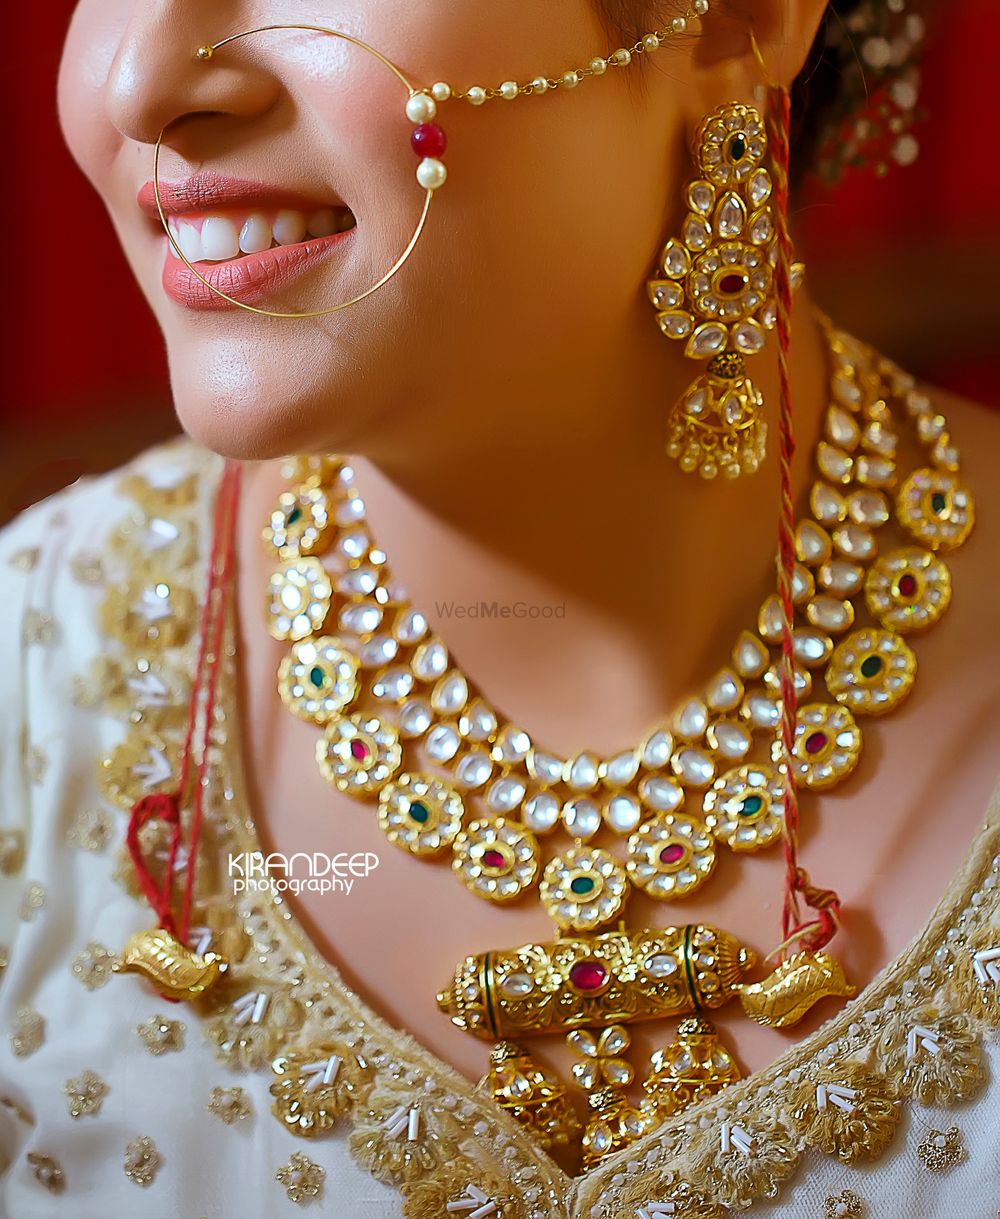 Photo of Bridal necklace with unique design